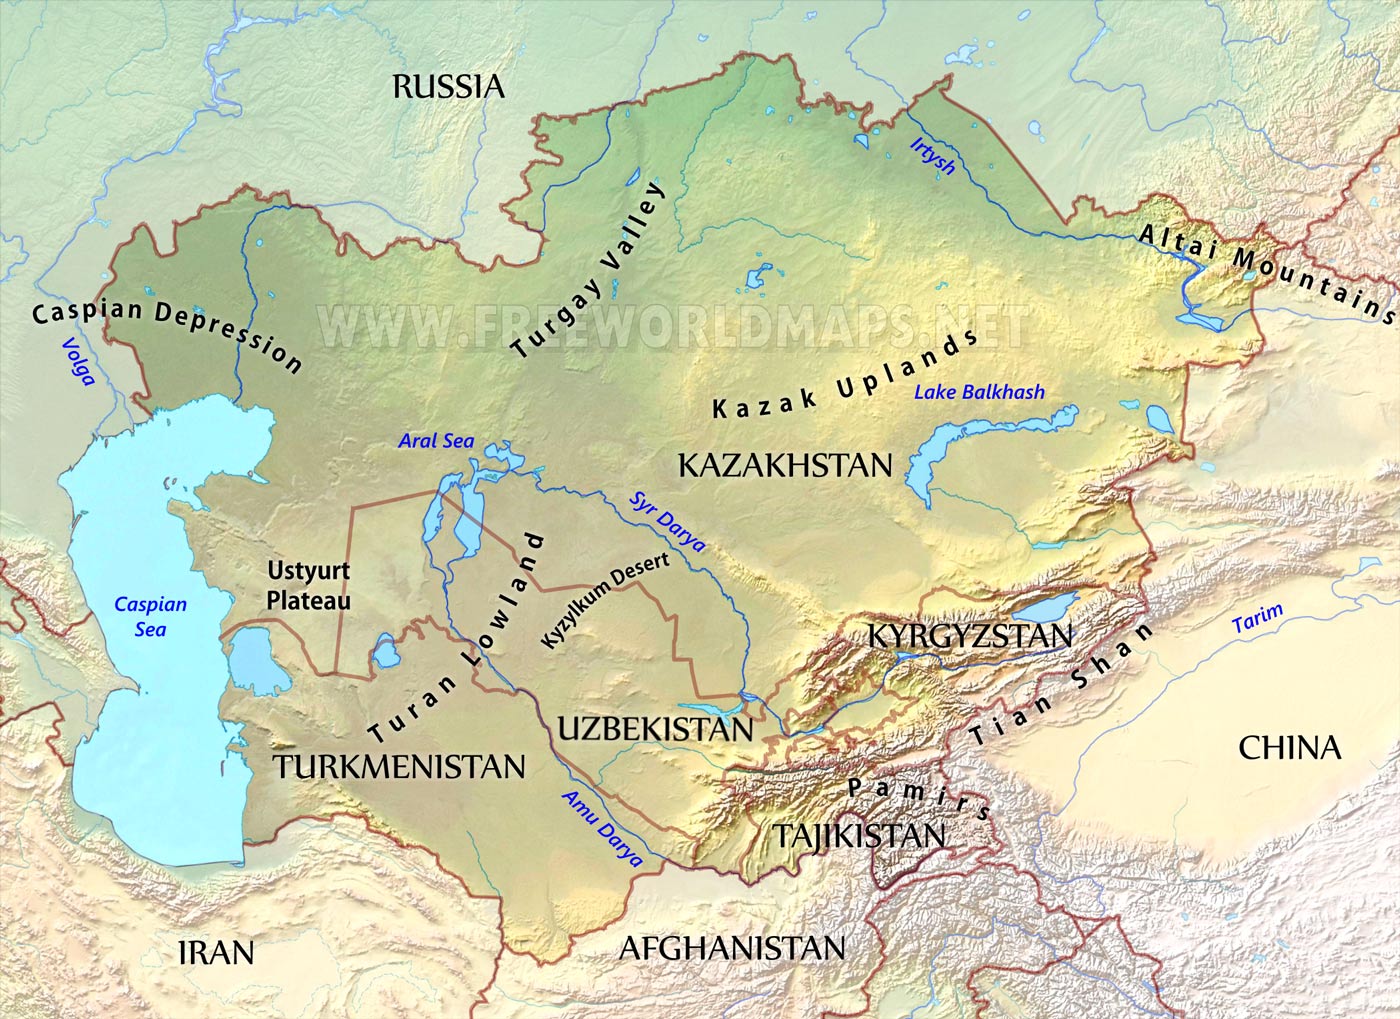 Asian mountain chains